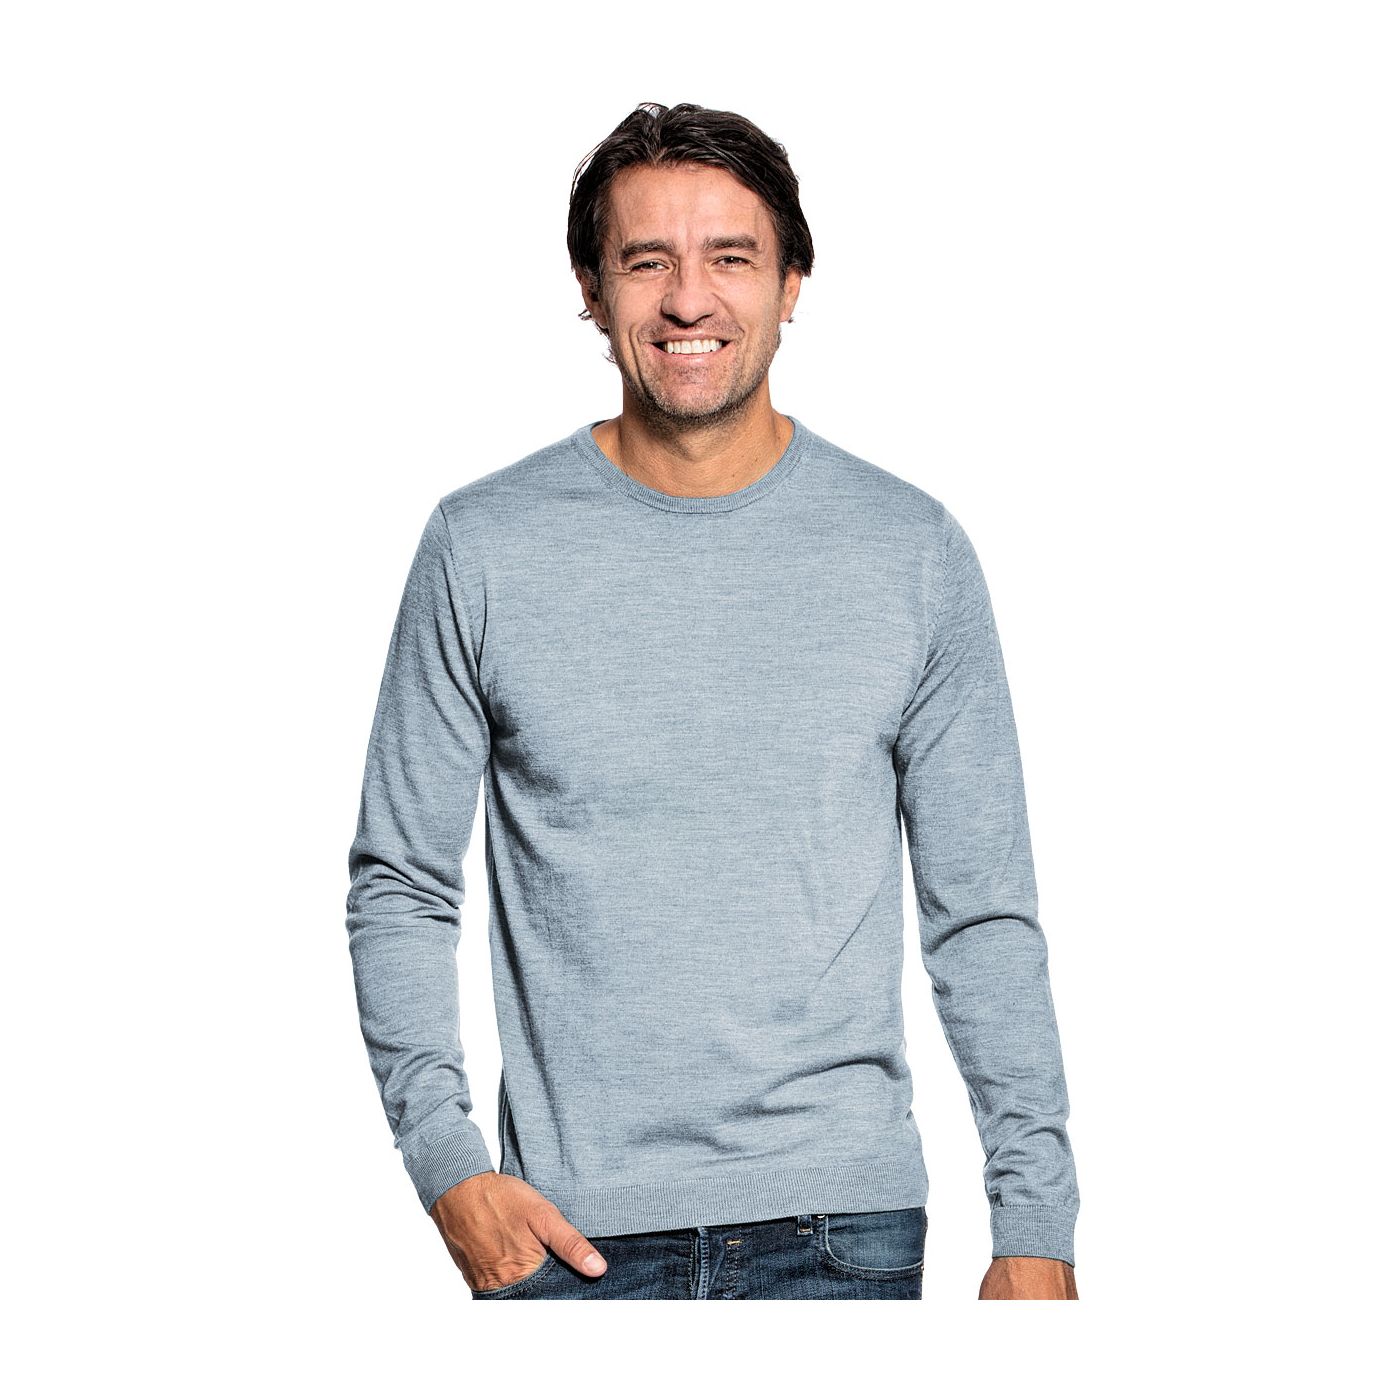 Crew neck sweater for men made of Merino wool in Light blue